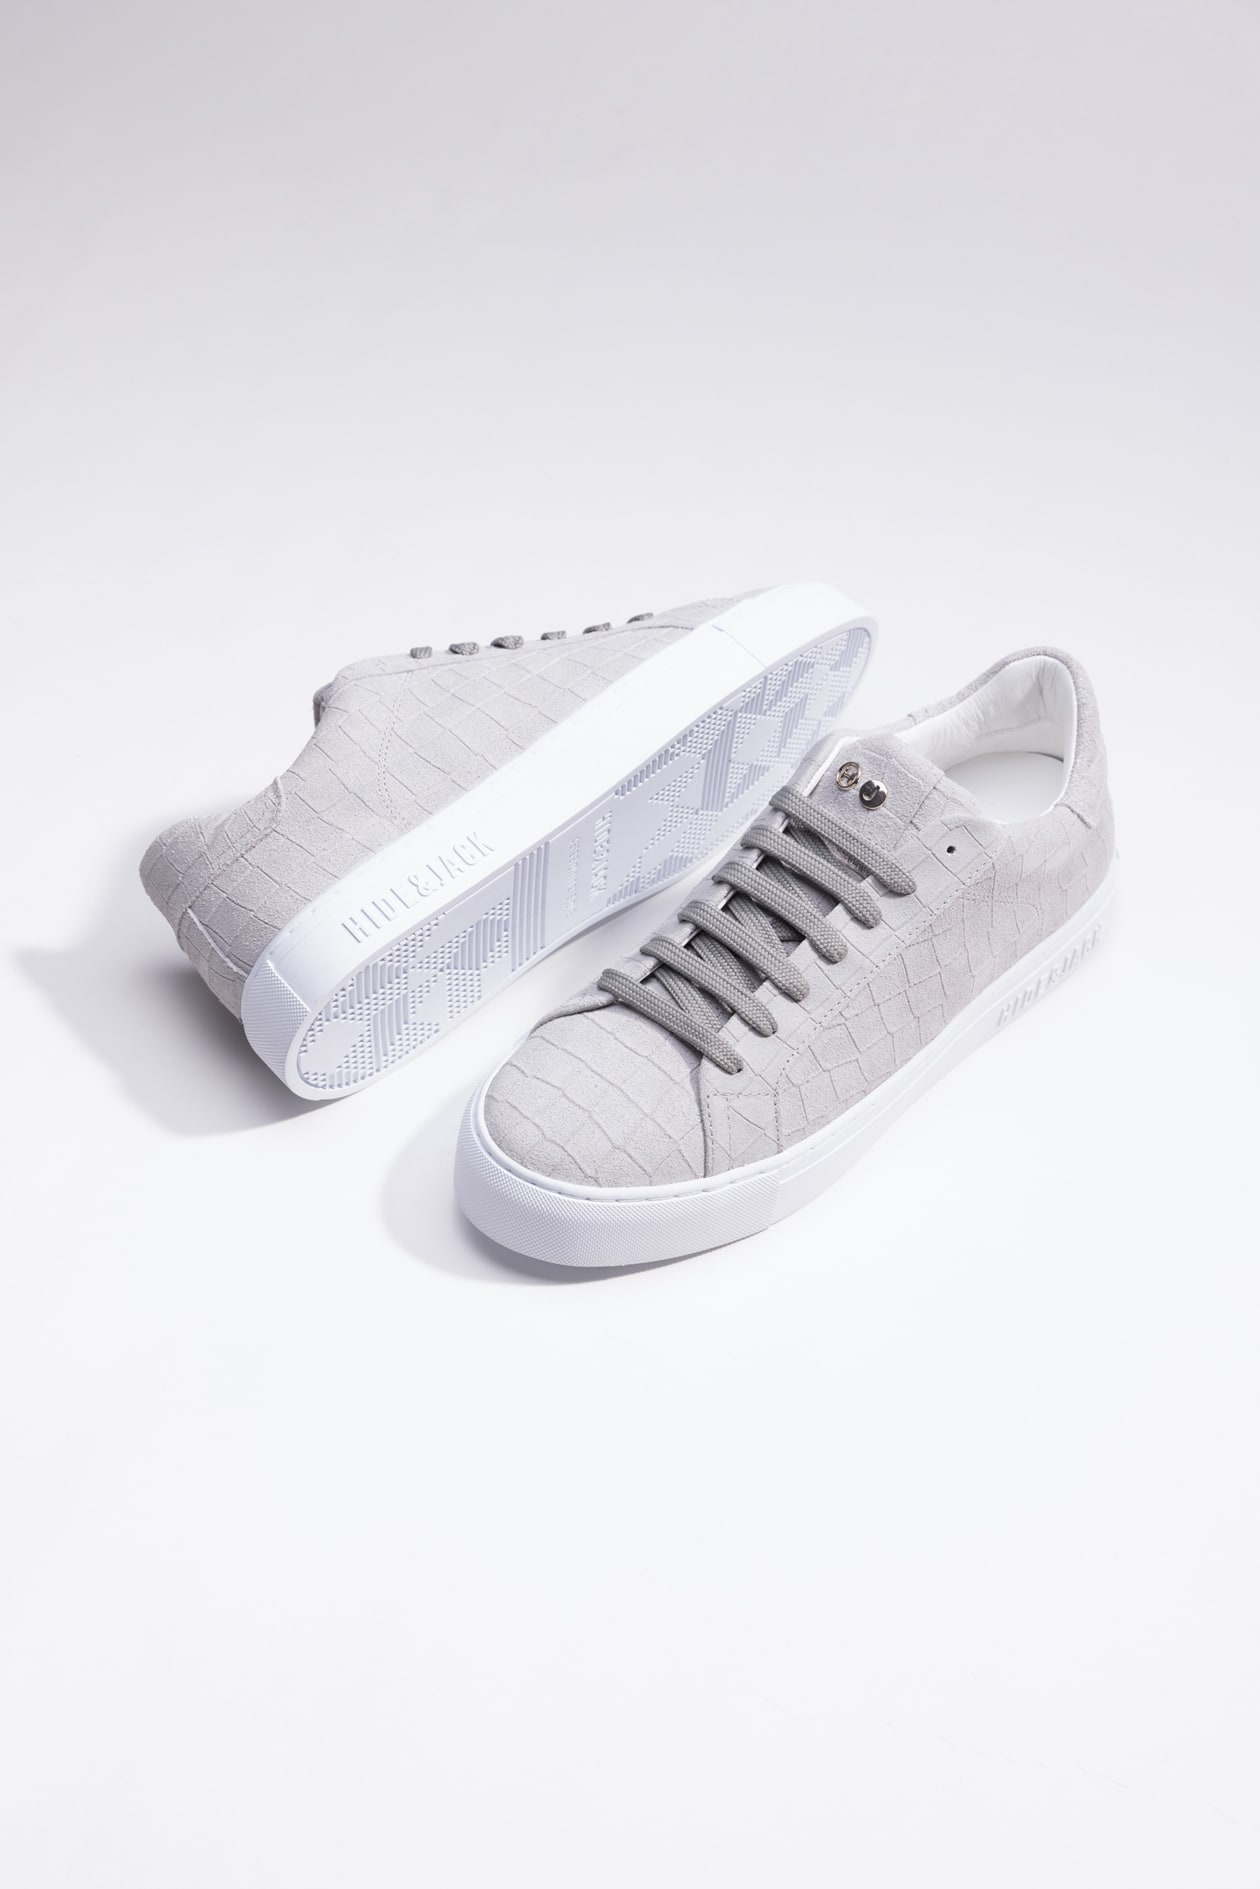 Hide&amp;jack Low Top Sneaker - Essence Suede Grey In Gray